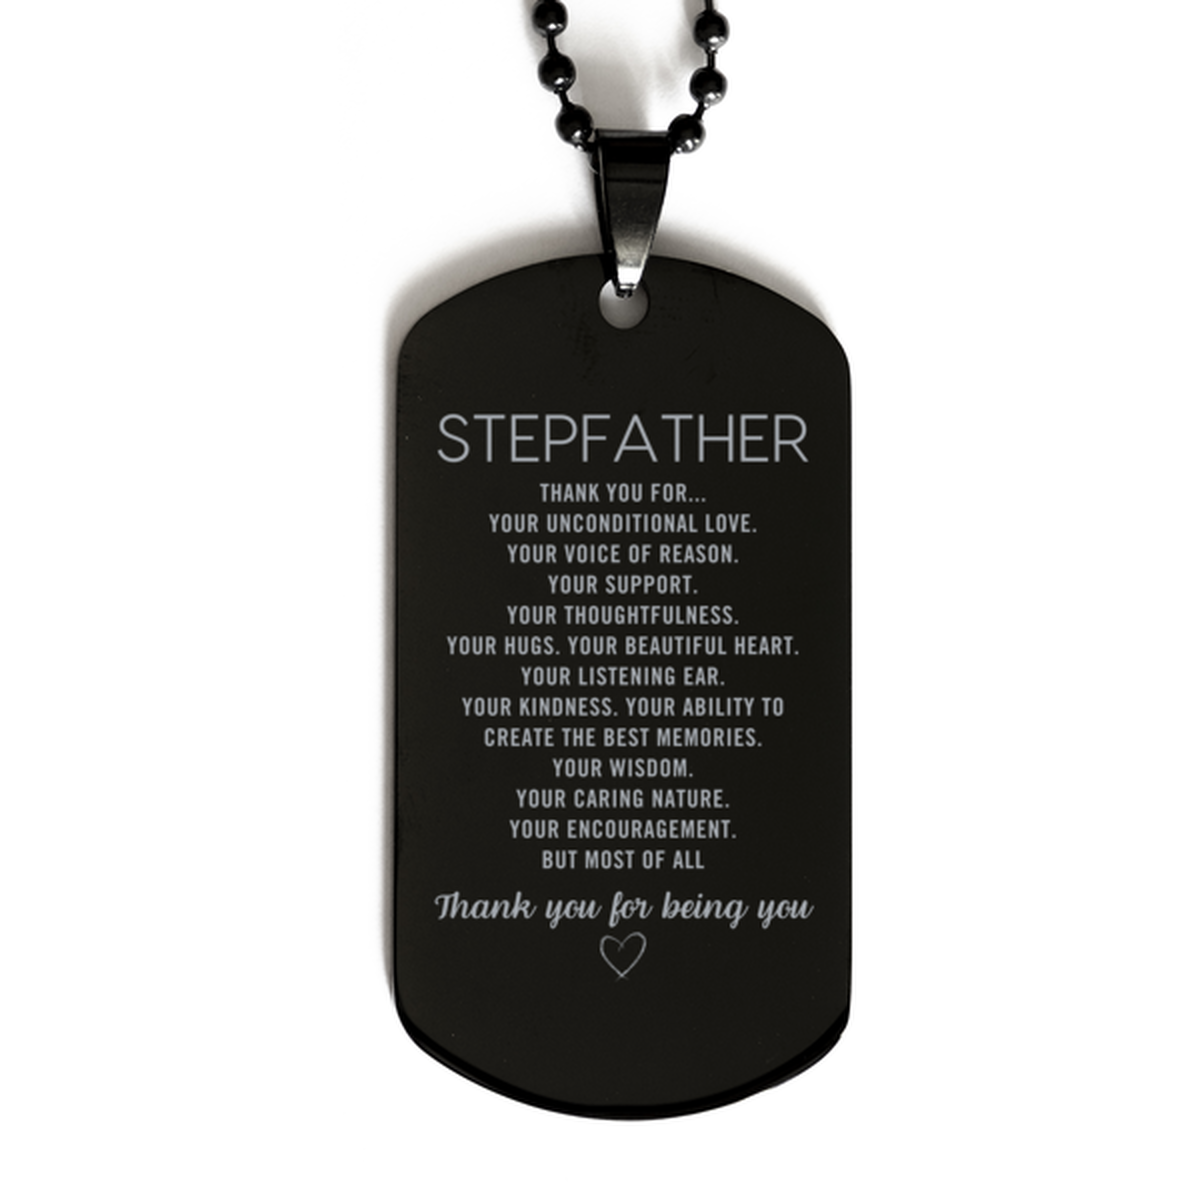 Stepfather Black Dog Tag Custom, Engraved Gifts For Stepfather Christmas Graduation Birthday Gifts for Men Women Stepfather Thank you for Your unconditional love